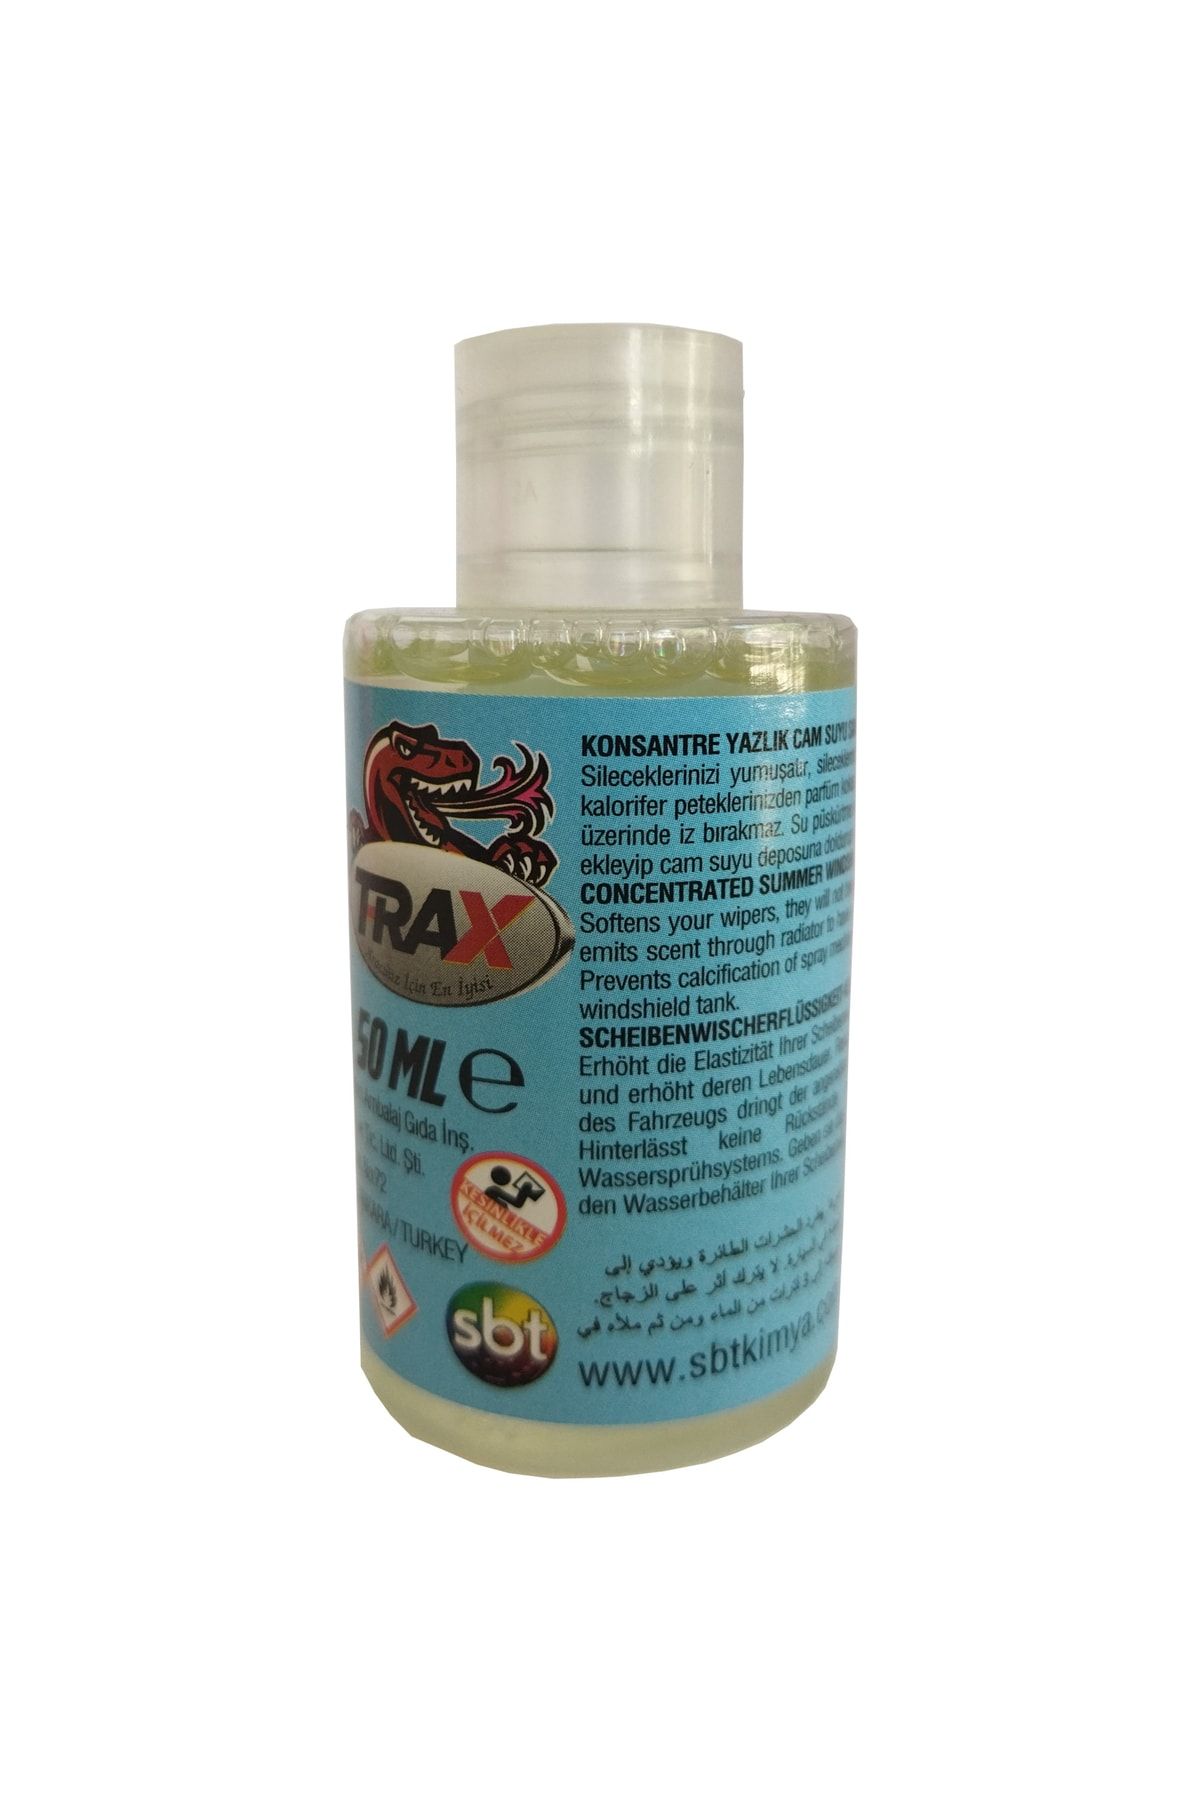 TRAX T-rax Konsantre Yazlık Cam Suyu Şampuanı 50 Ml Konsantre Camsuyu